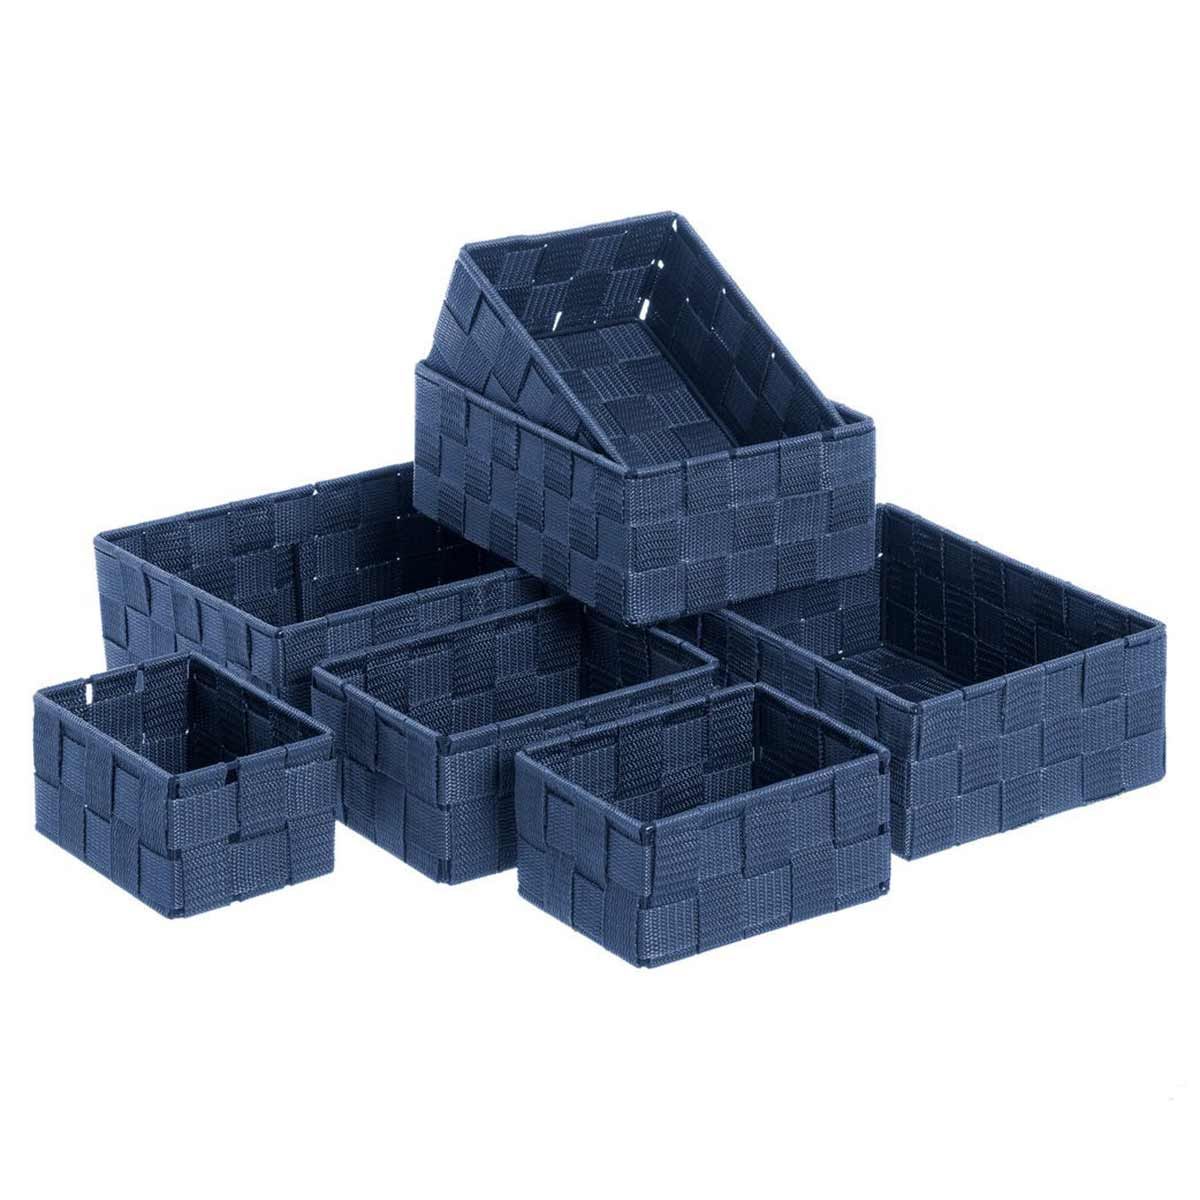 Set of 7 decorative baskets - blue